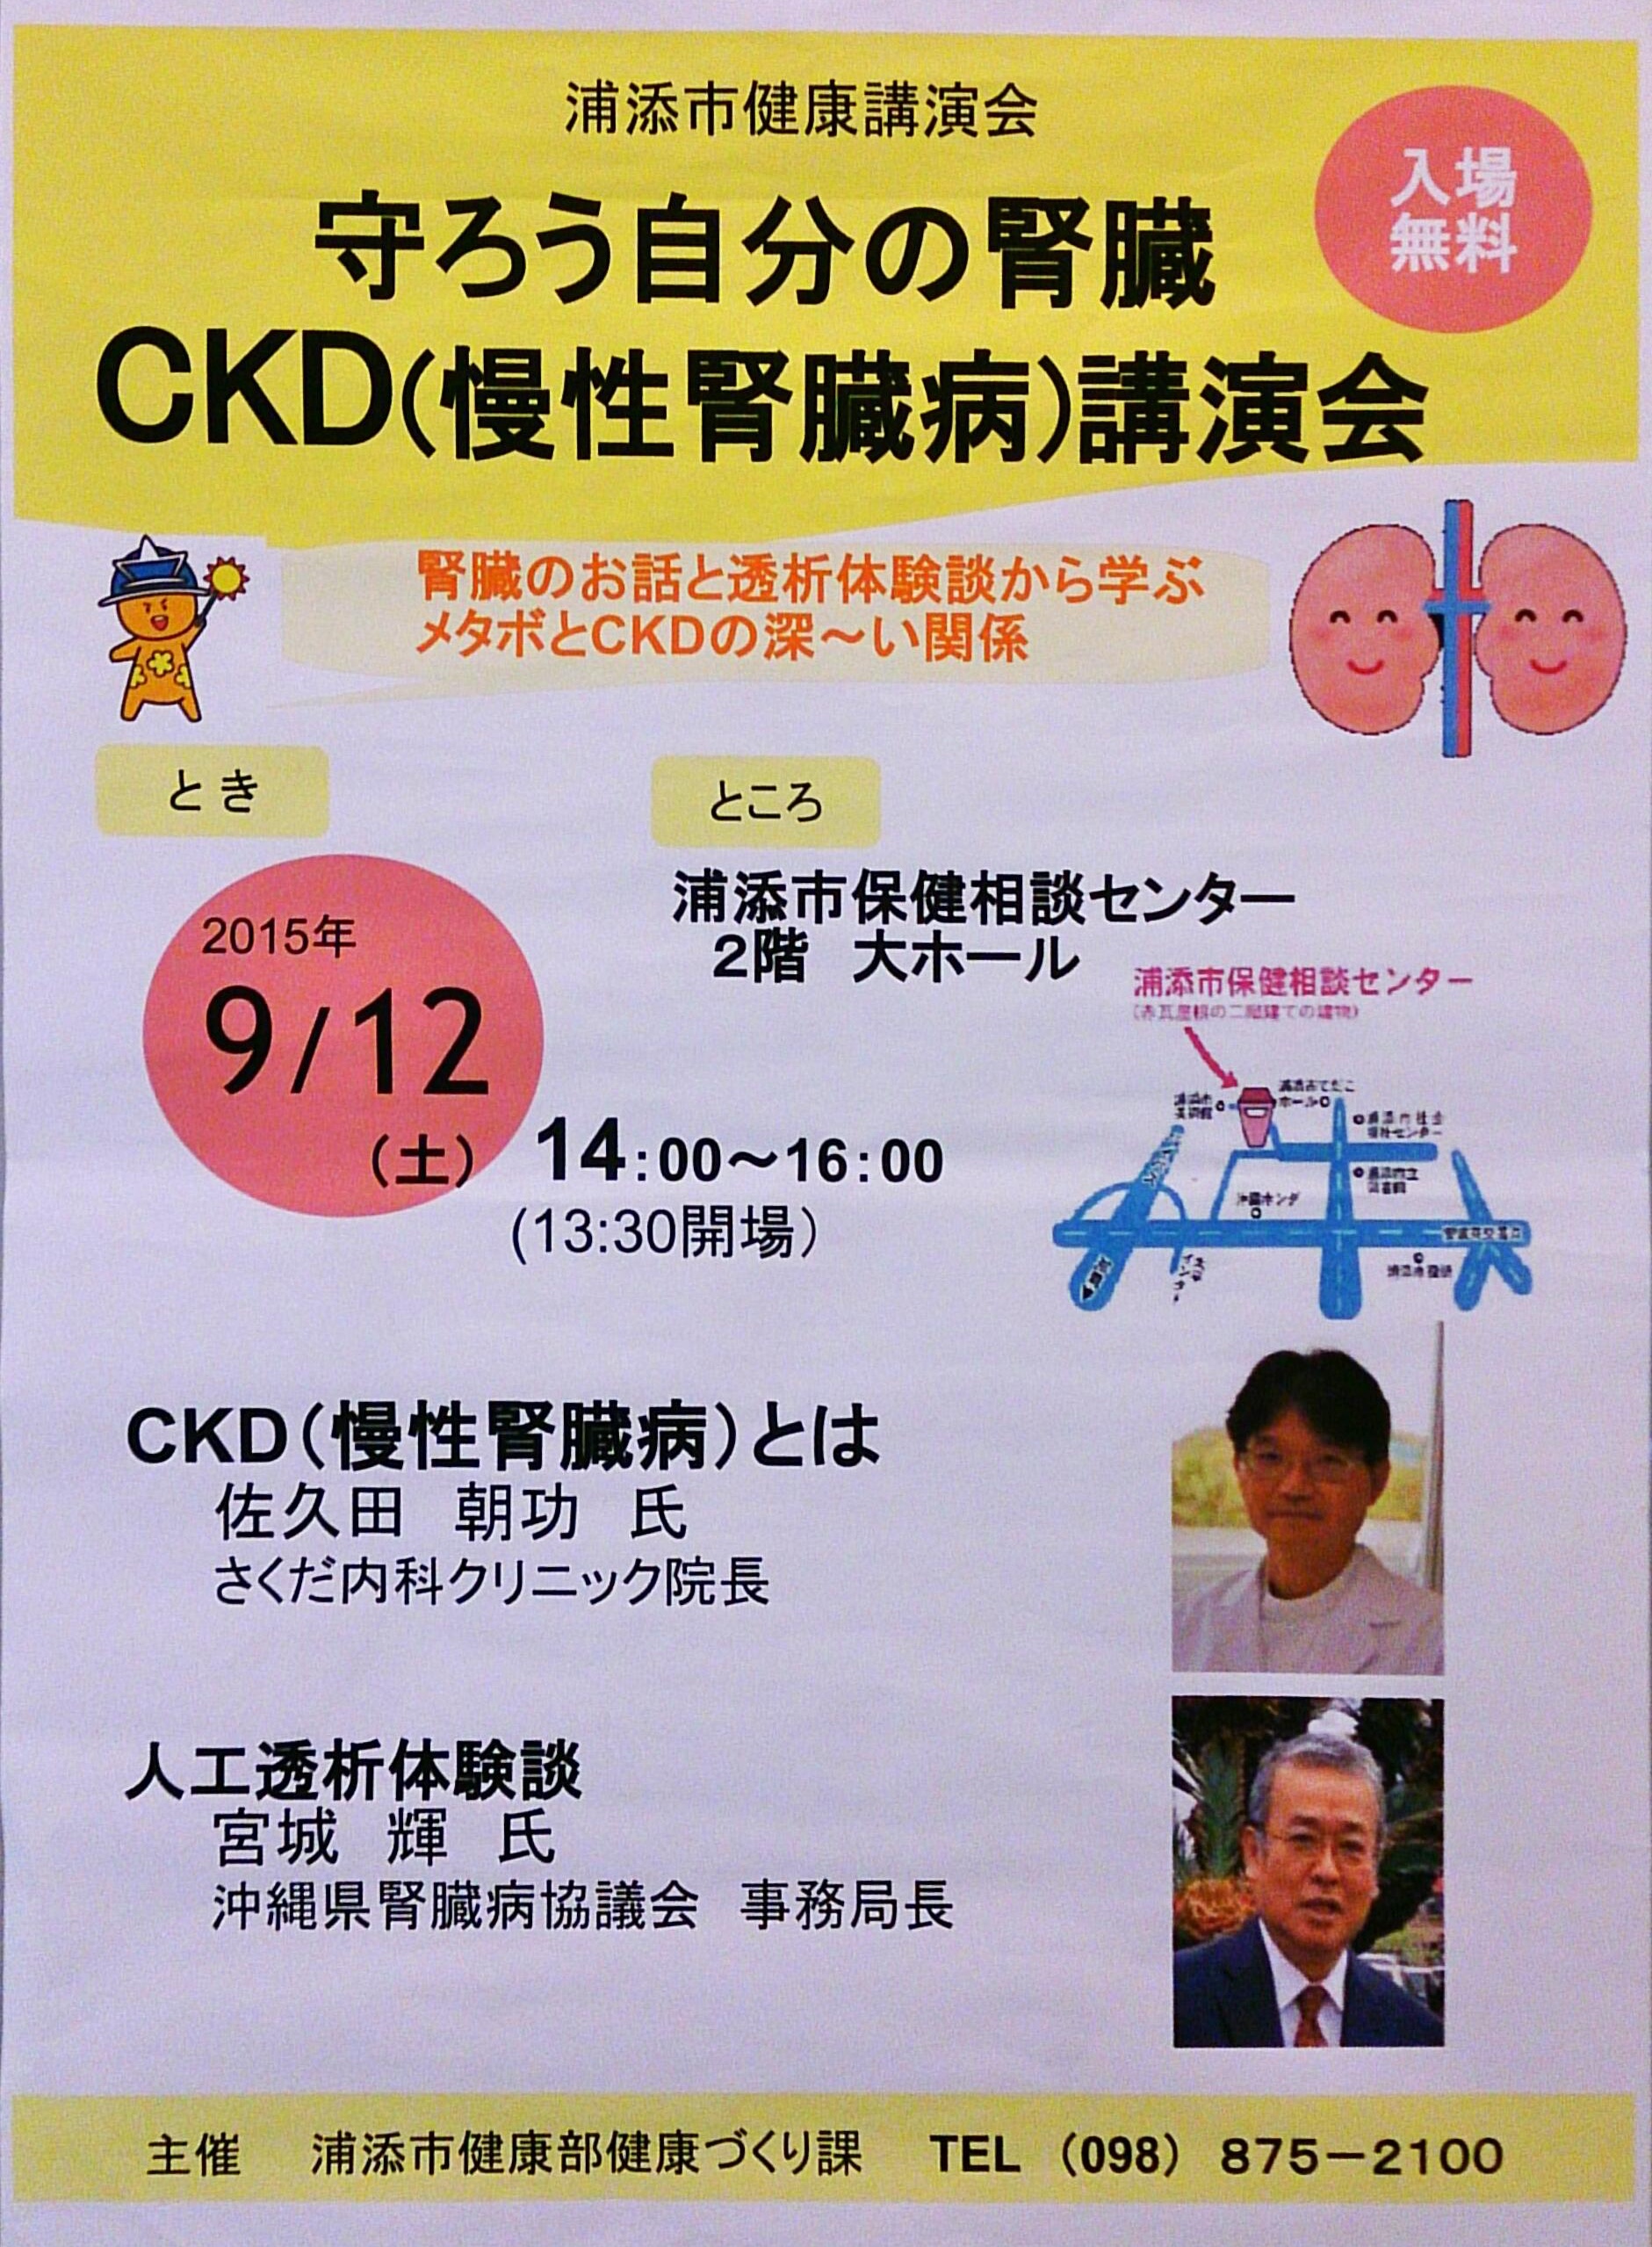 CKD講演会